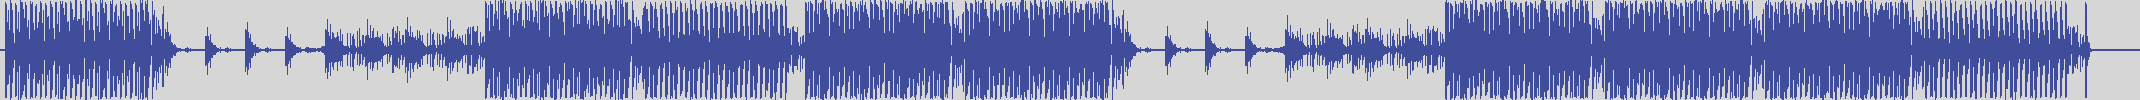 nf_boyz_records [NFY036] Soho Freak - New Opportunity [Deep Joint Mix] audio wave form